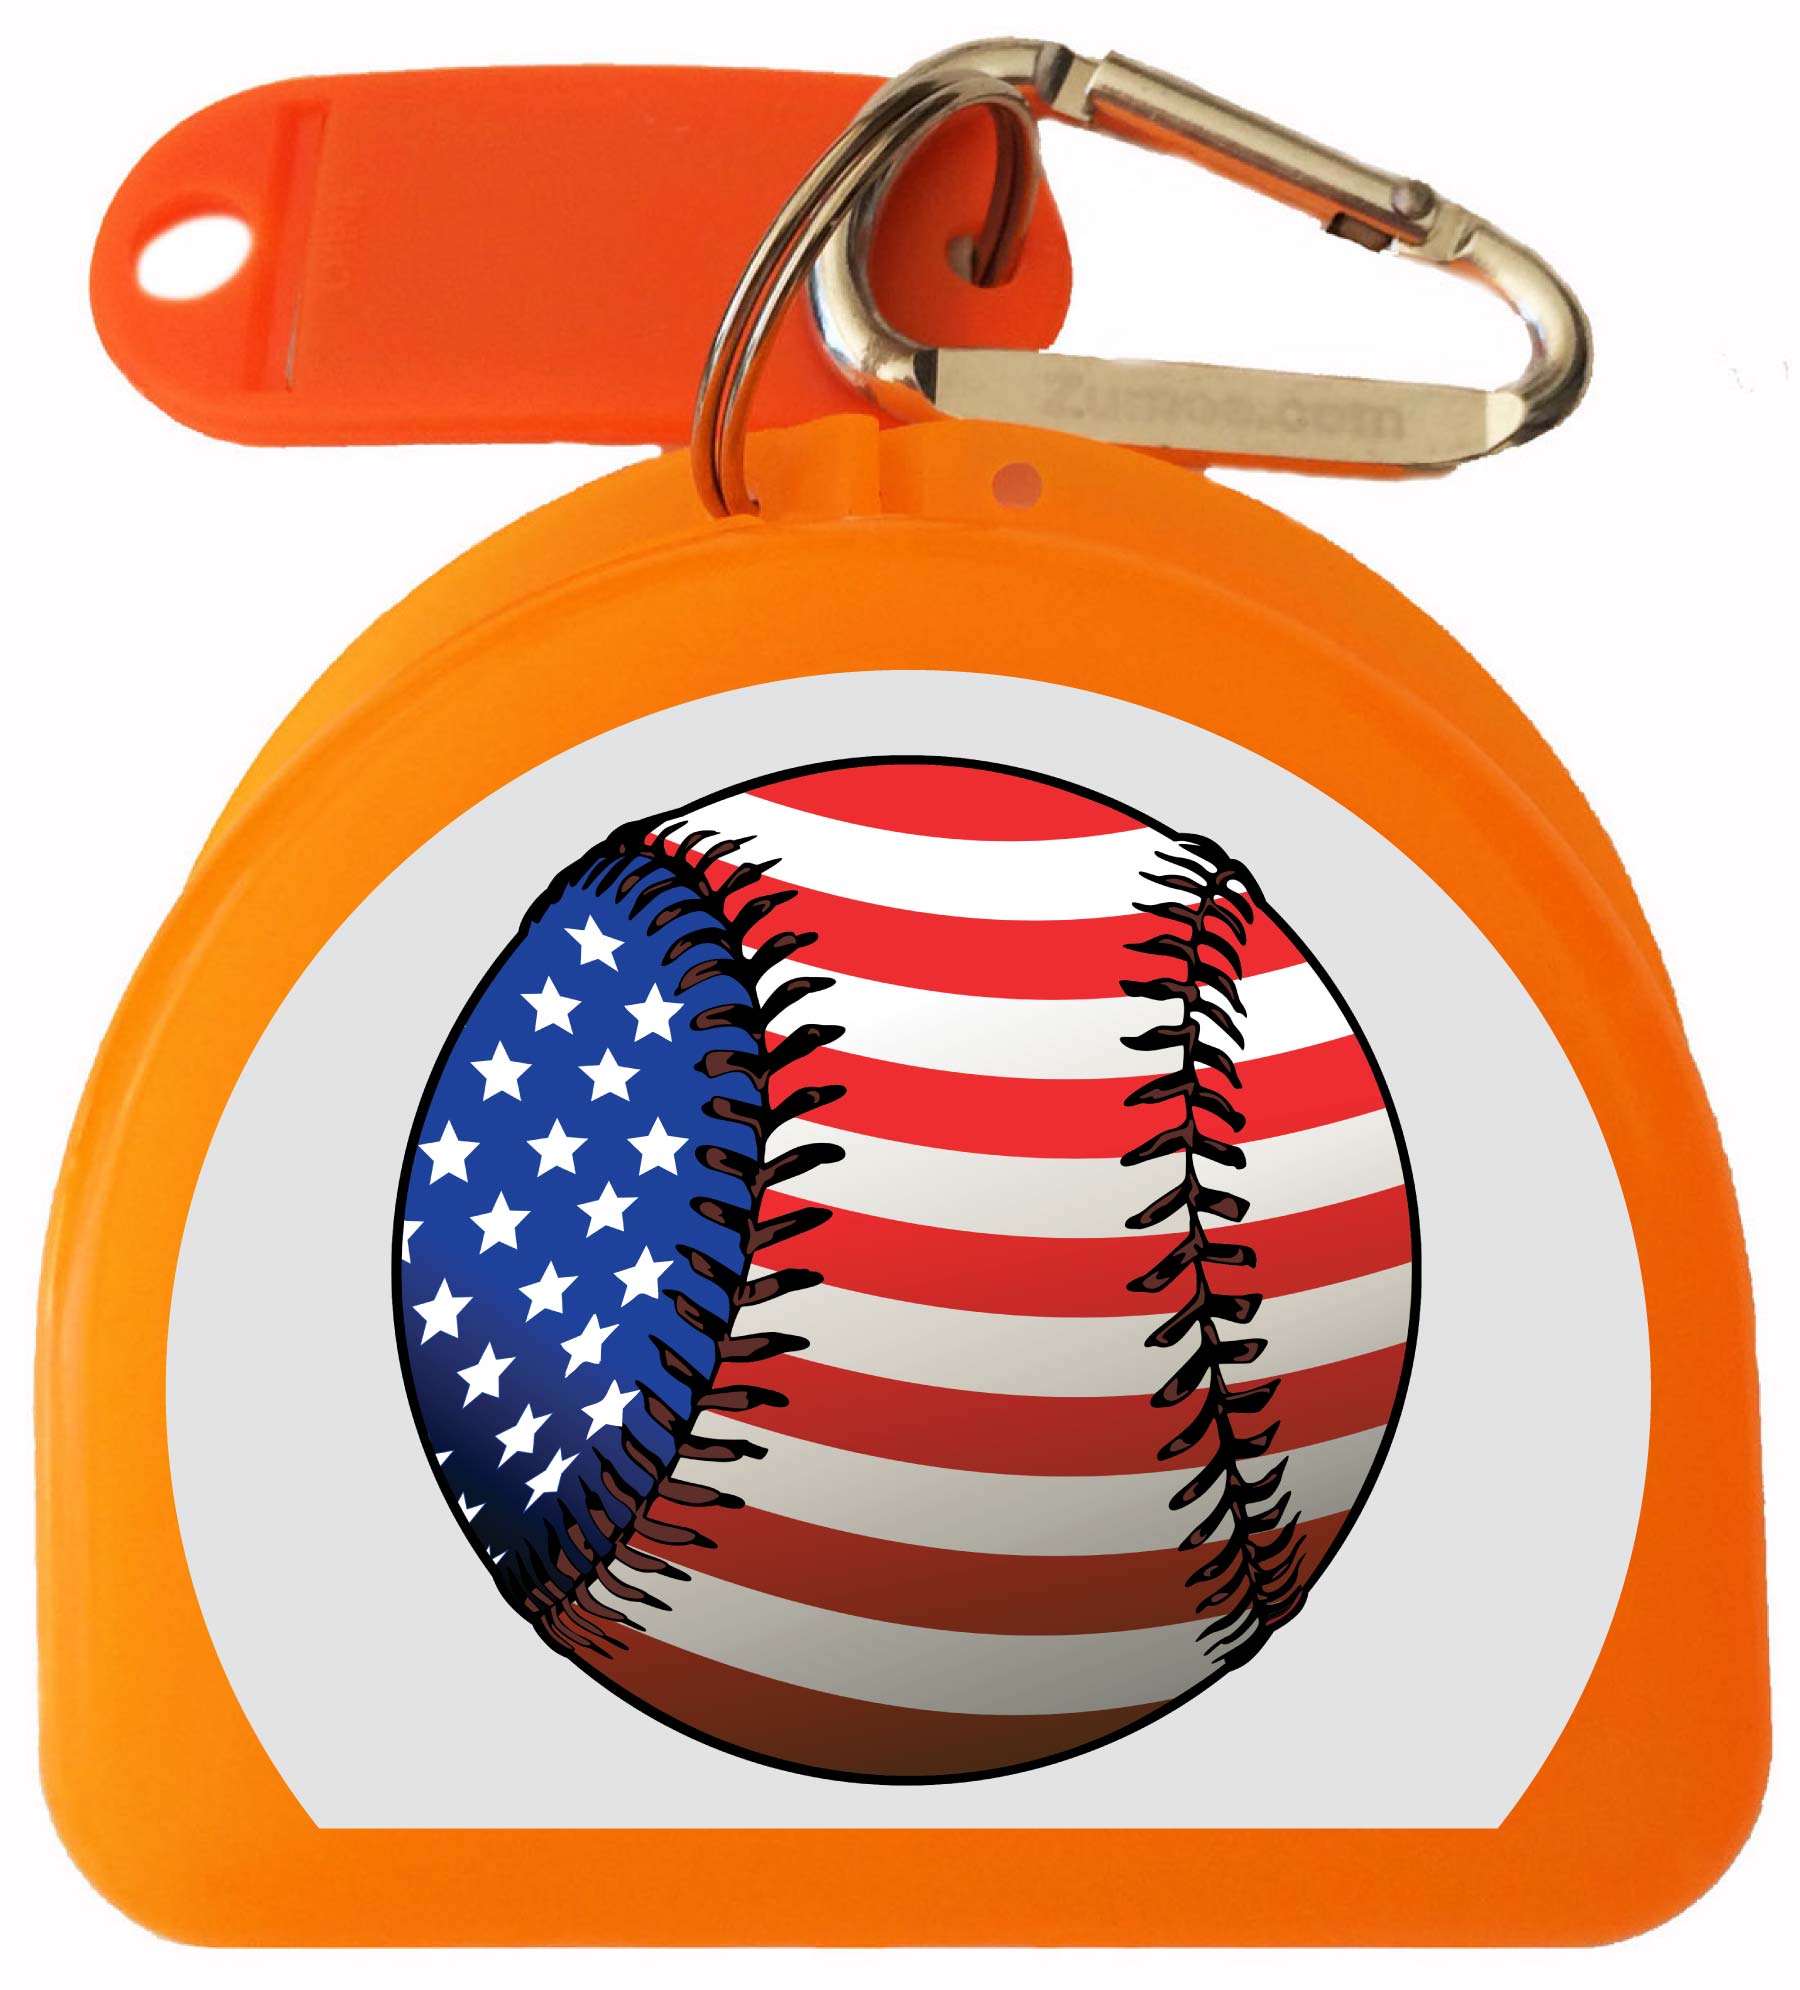 671 - Mouth Guard Case - American Baseball